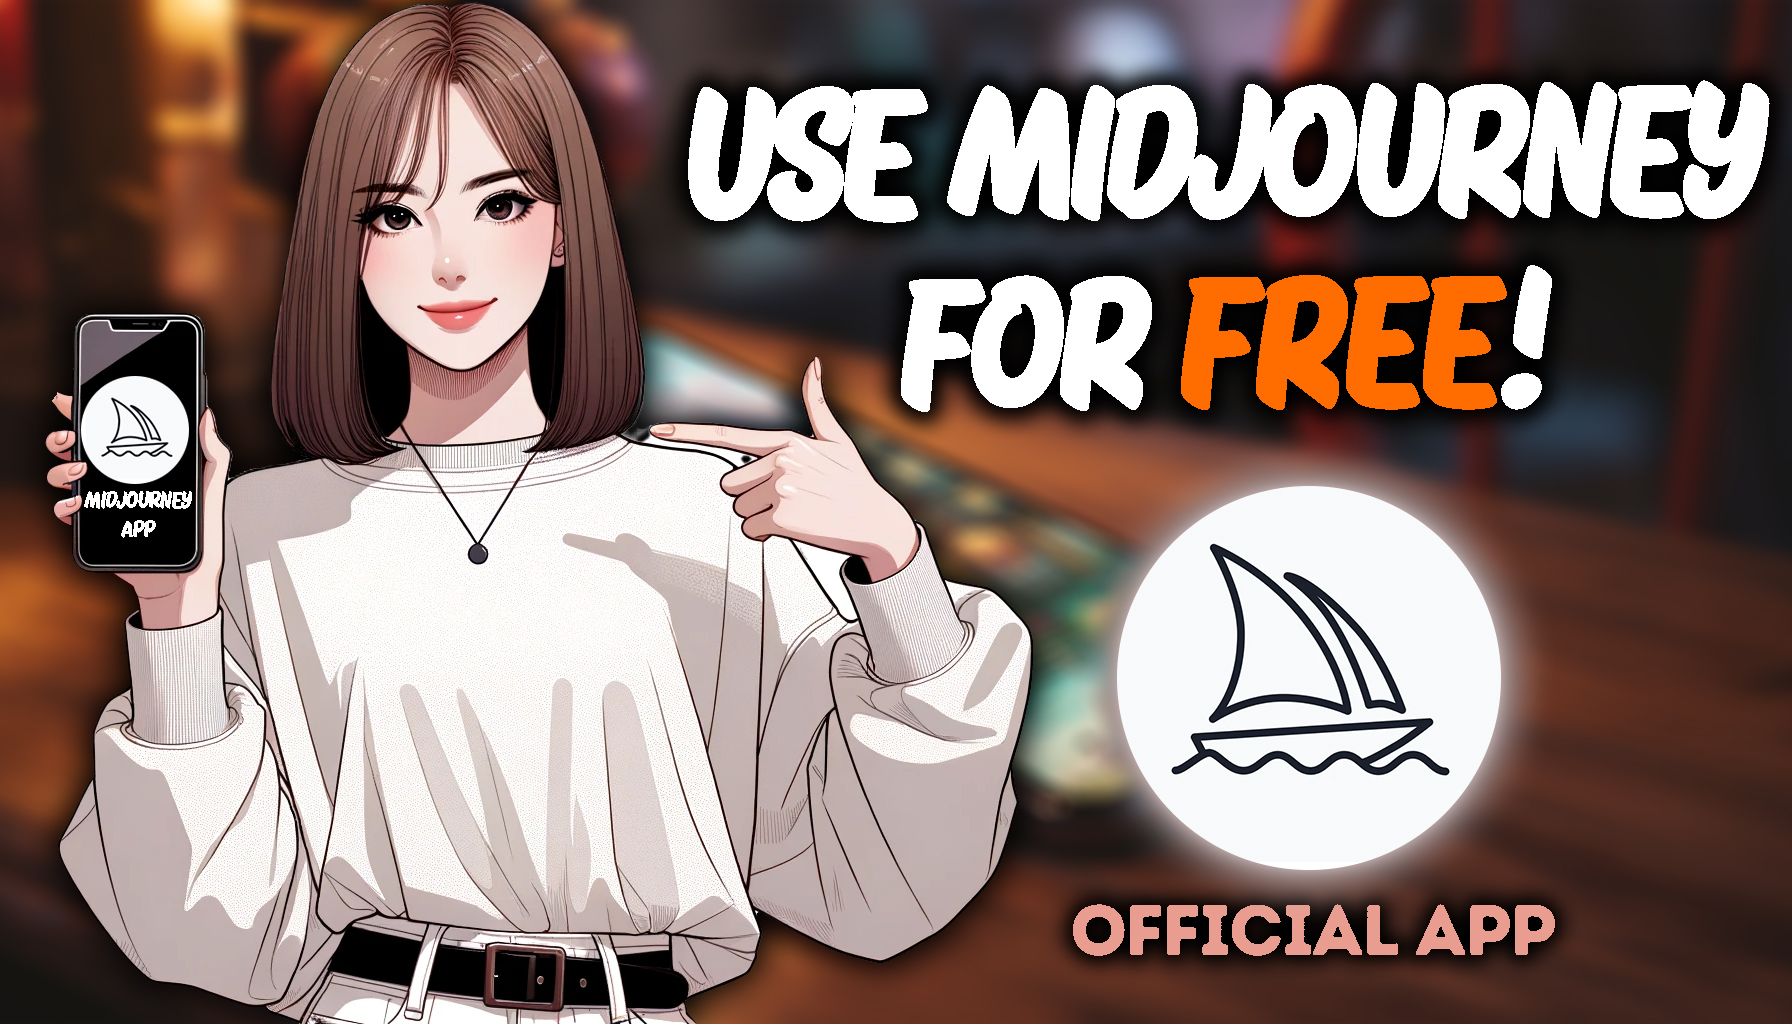 Mijdourney Mobile App Tutorial! Use Midjourney for FREE | Niji Journey